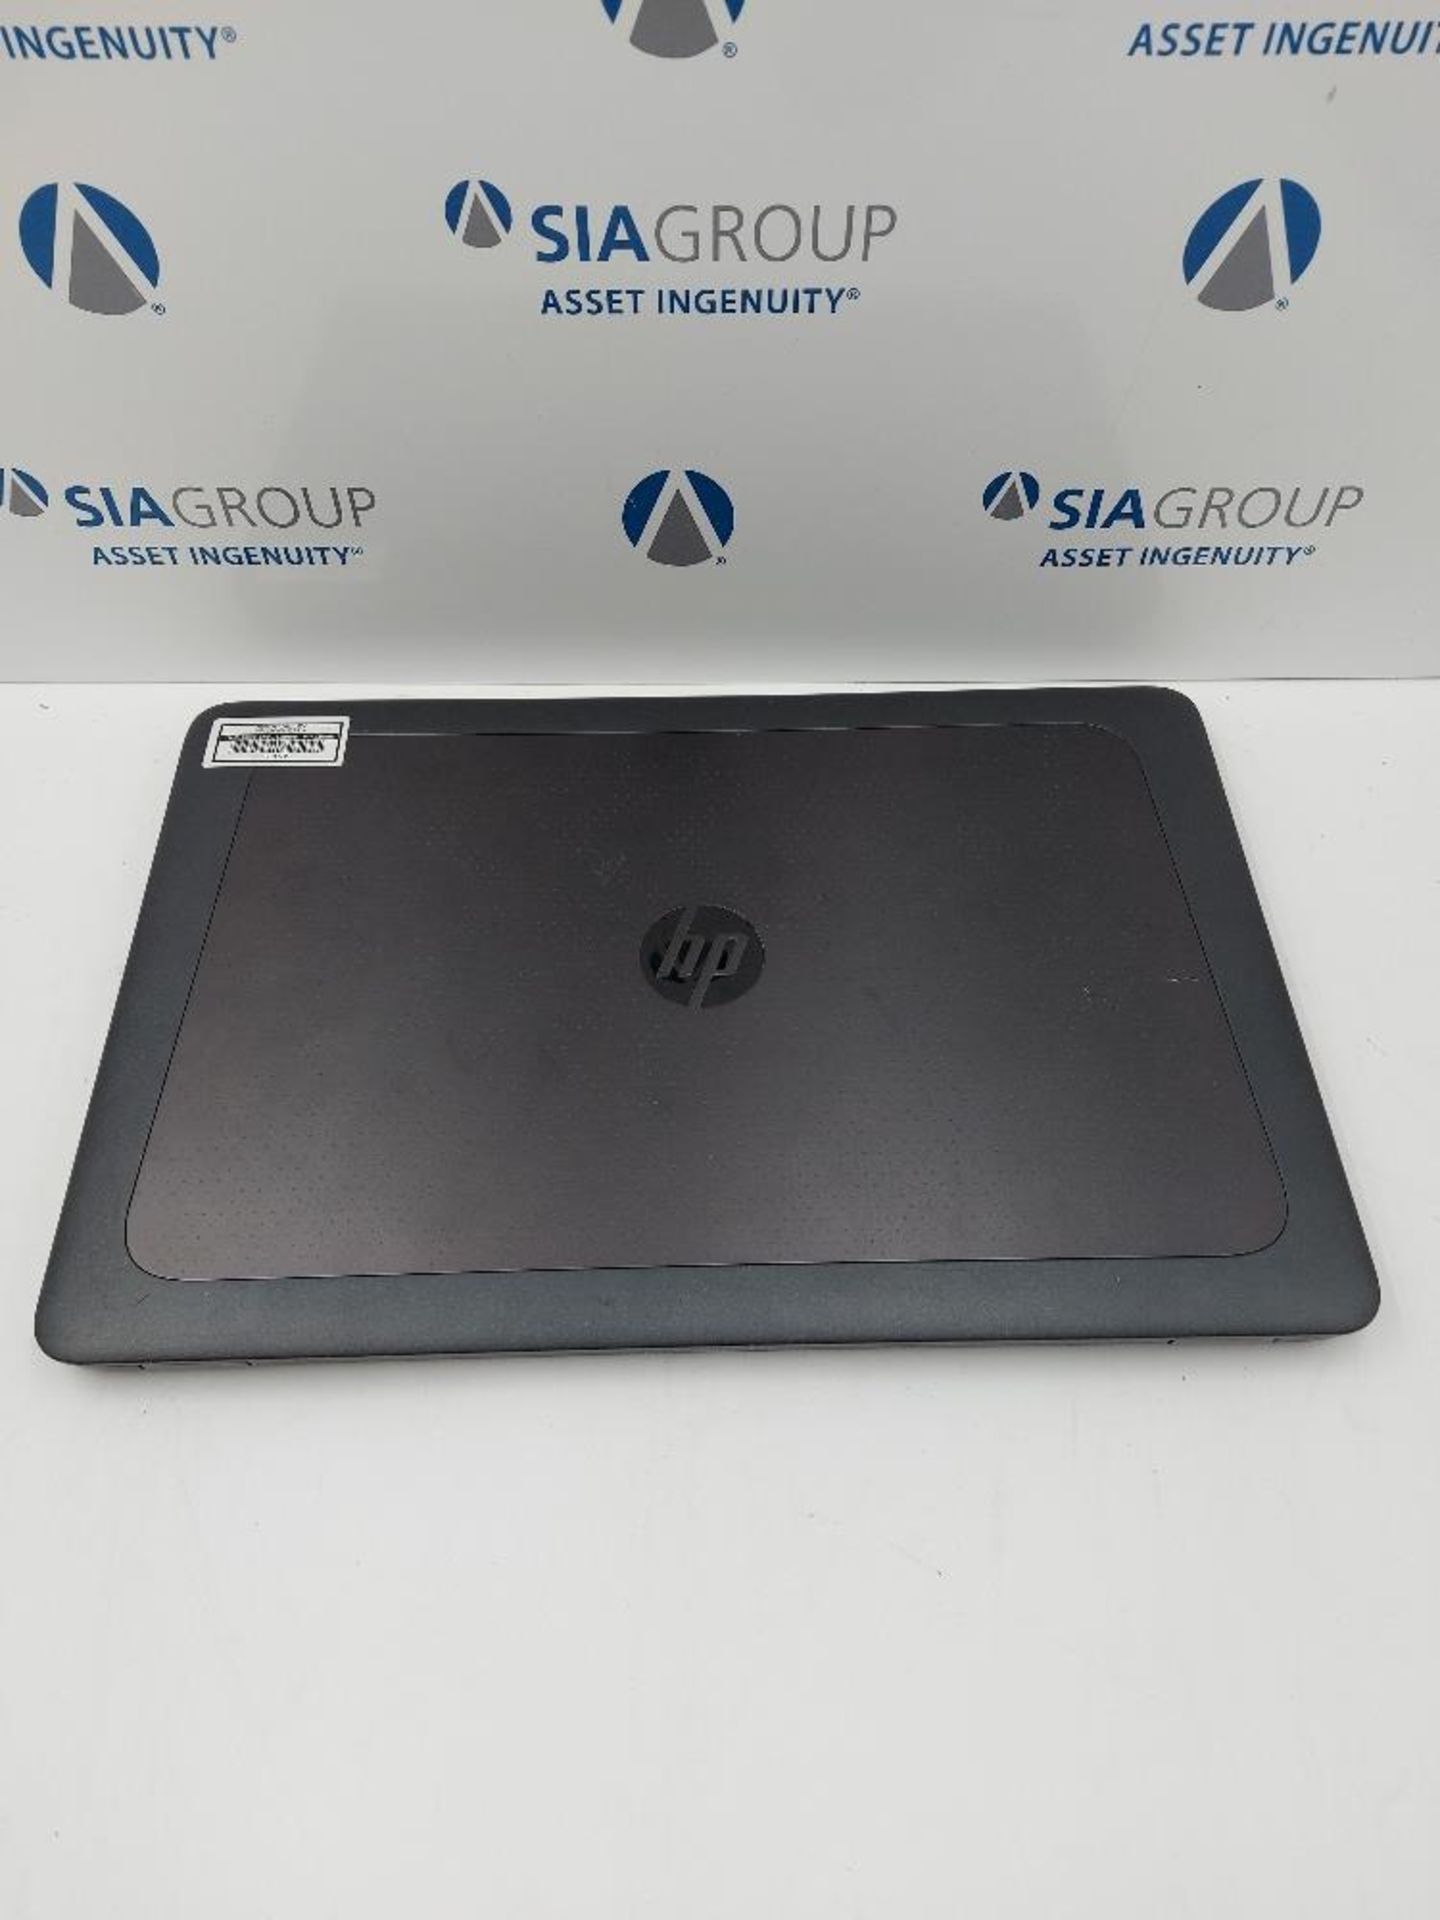 HP Zbook 15u G3 Laptop with Flight Case - Image 4 of 12